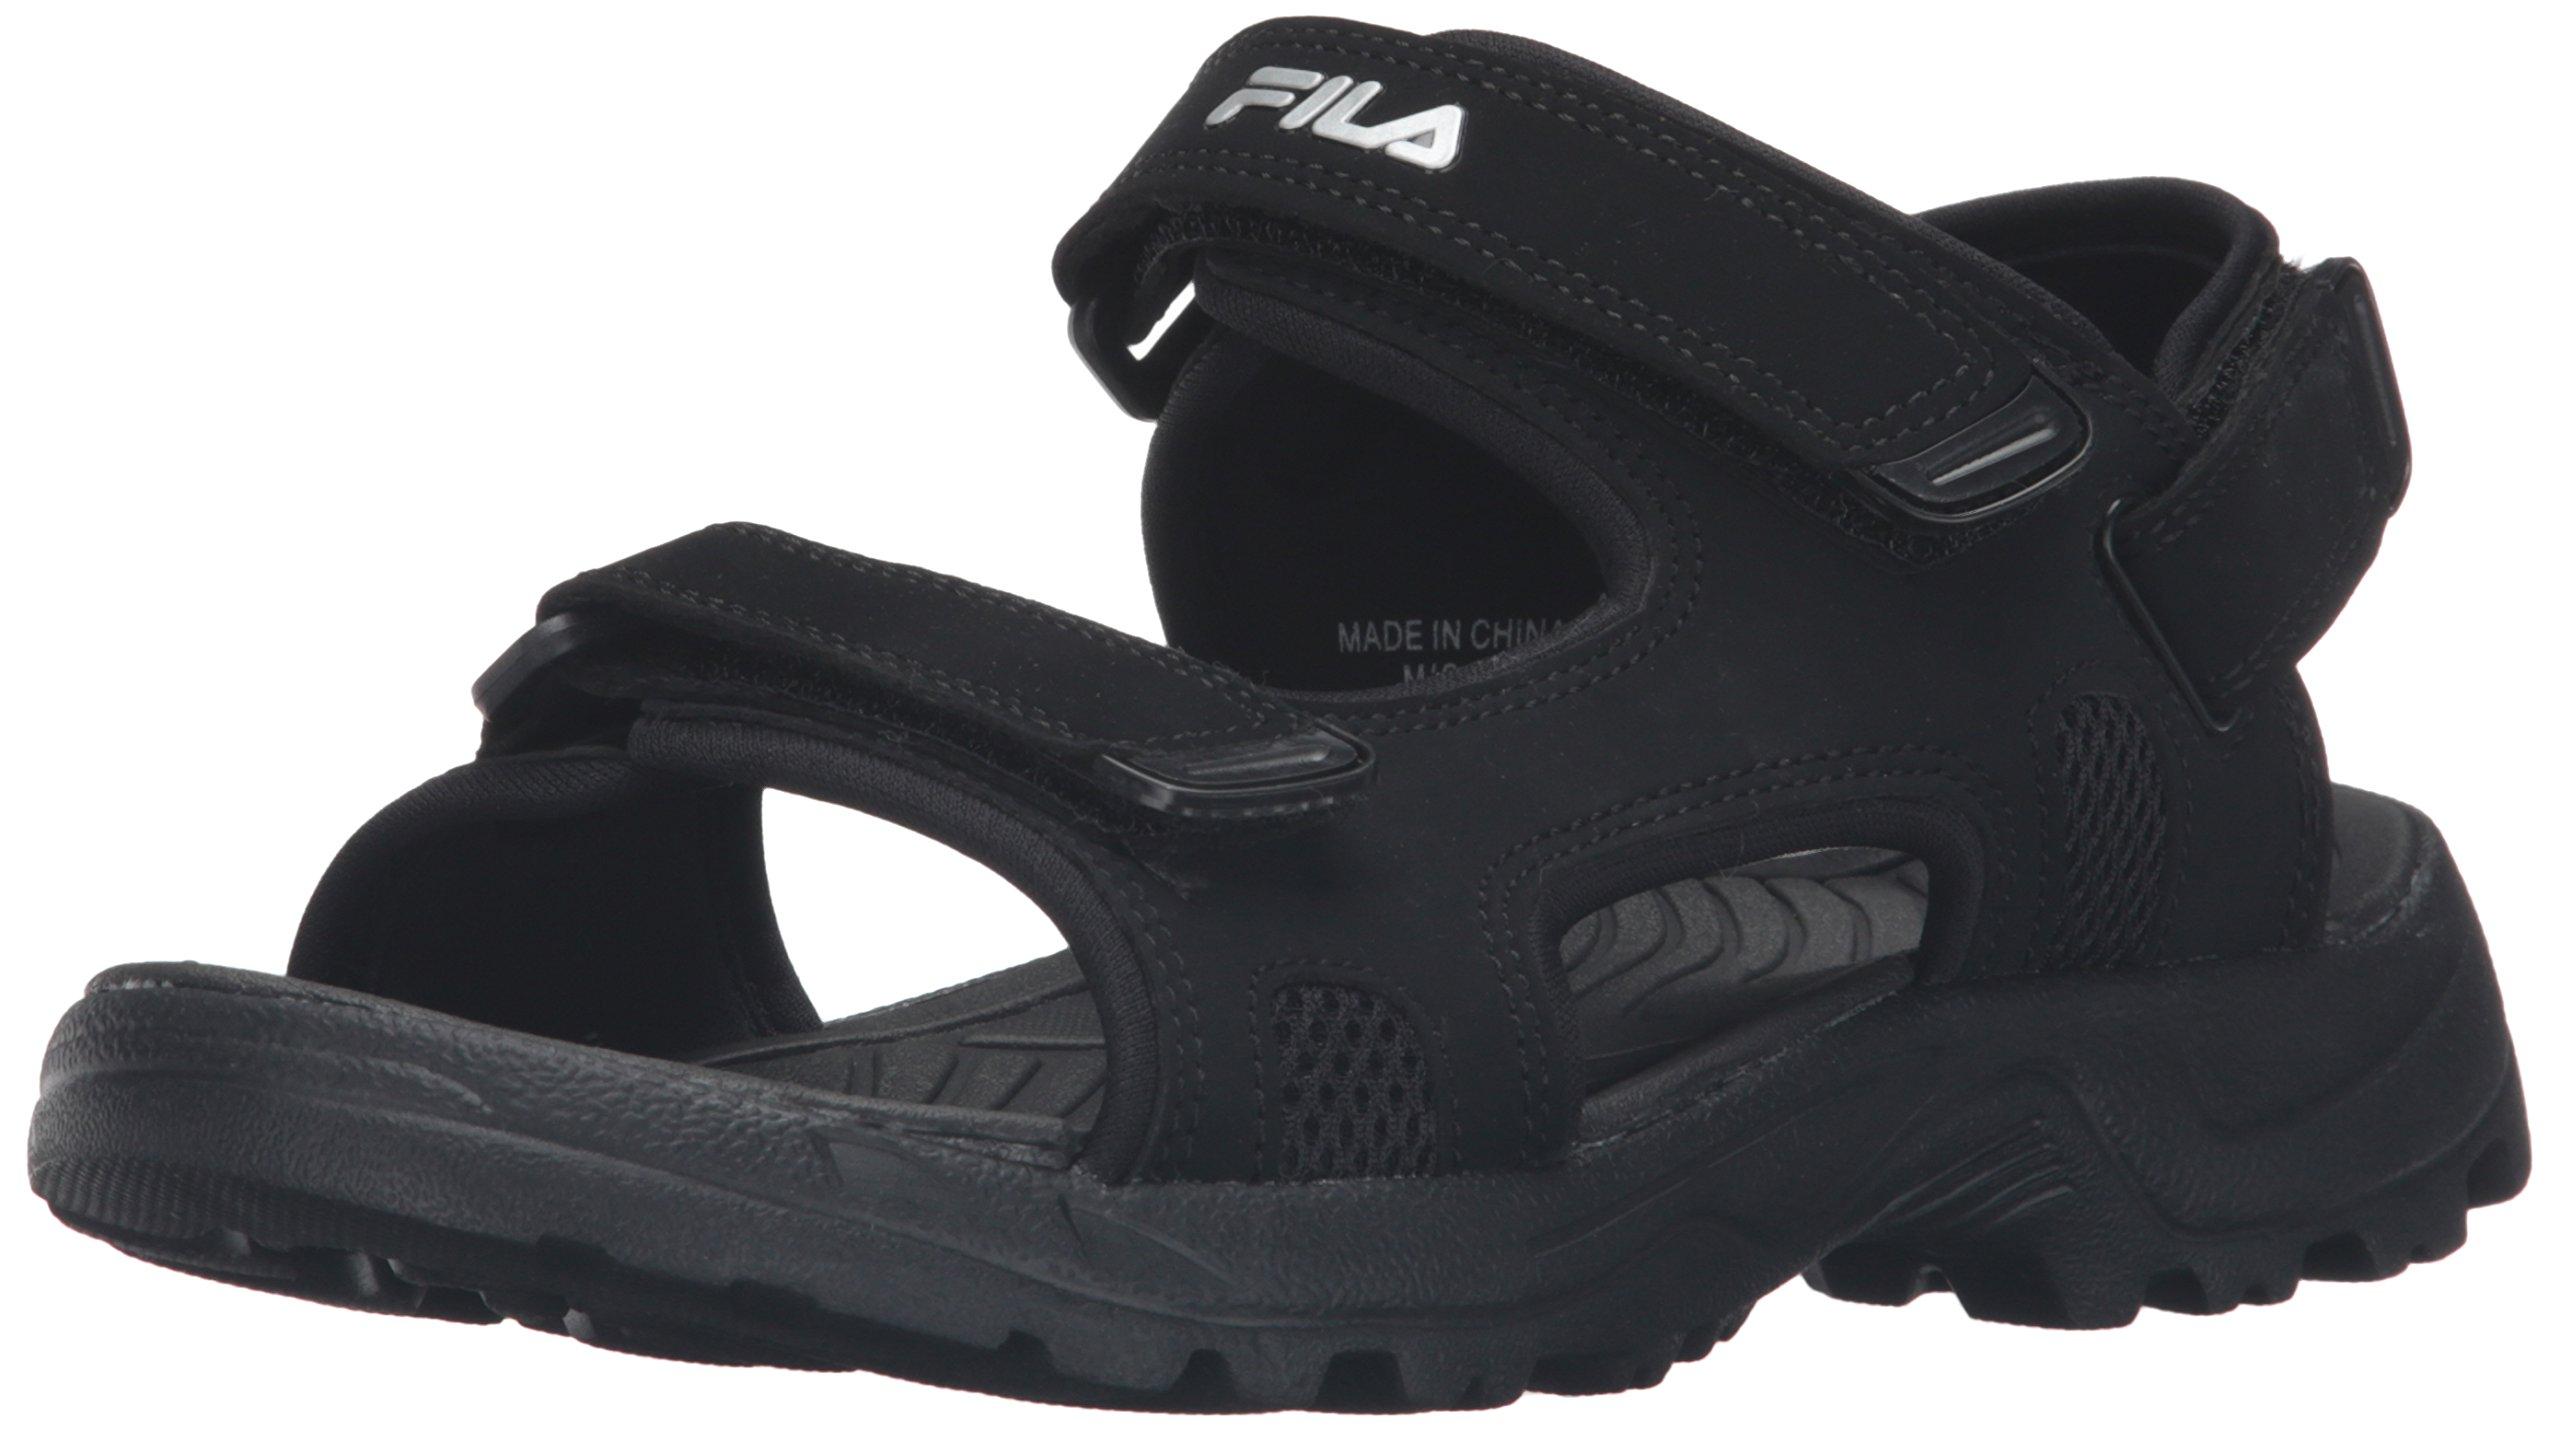 Fila Rubber Transition Athletic Sandal in Black/Black/Metallic Silver  (Black) for Men - Save 13% | Lyst